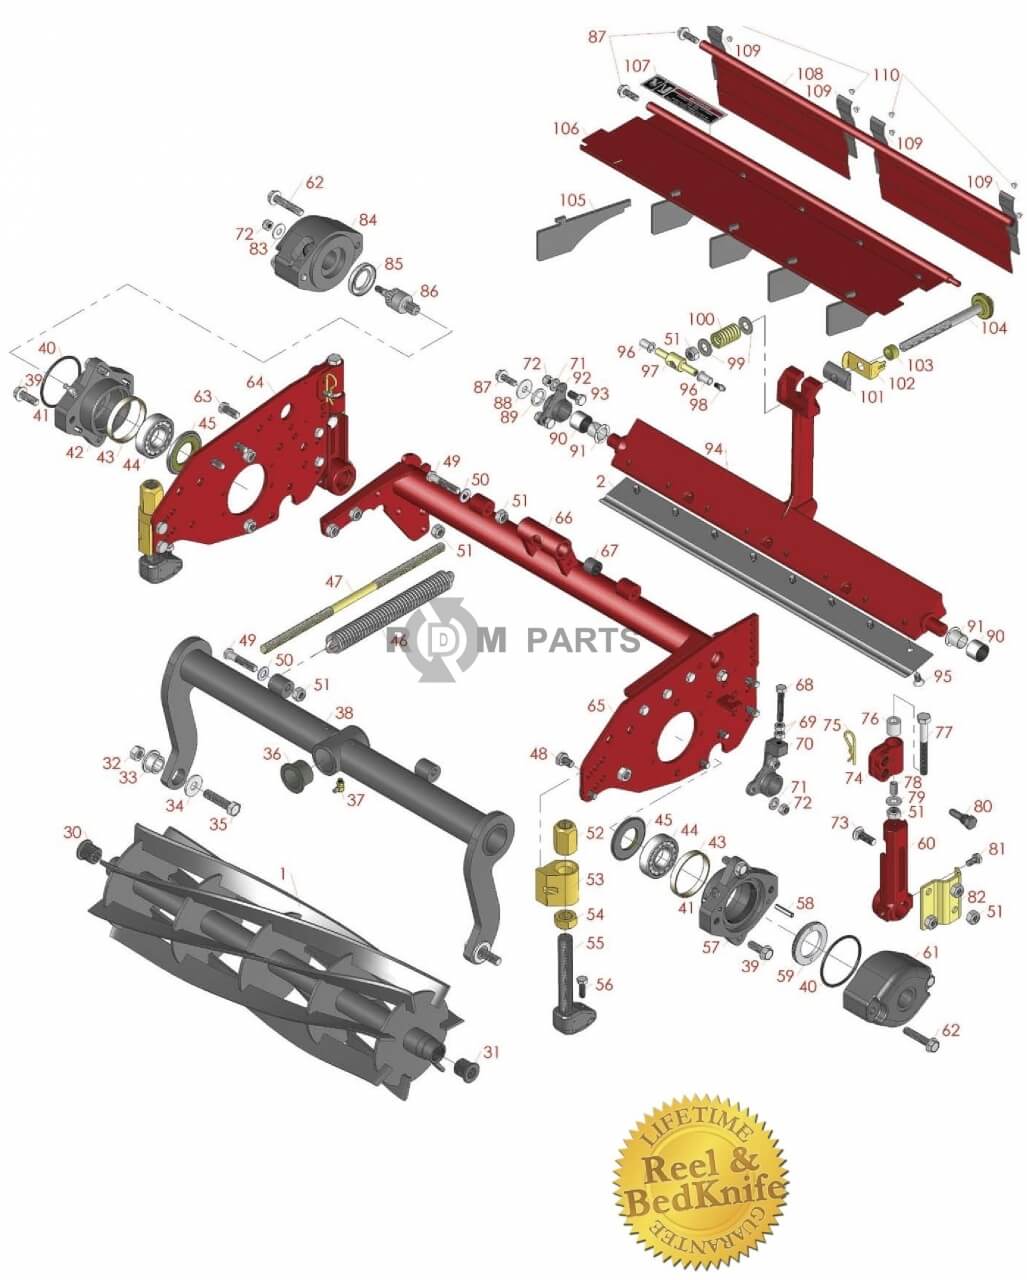 Replacement parts for RM 6500D & 6700D cutting unit Model 03857 03858 & 03859